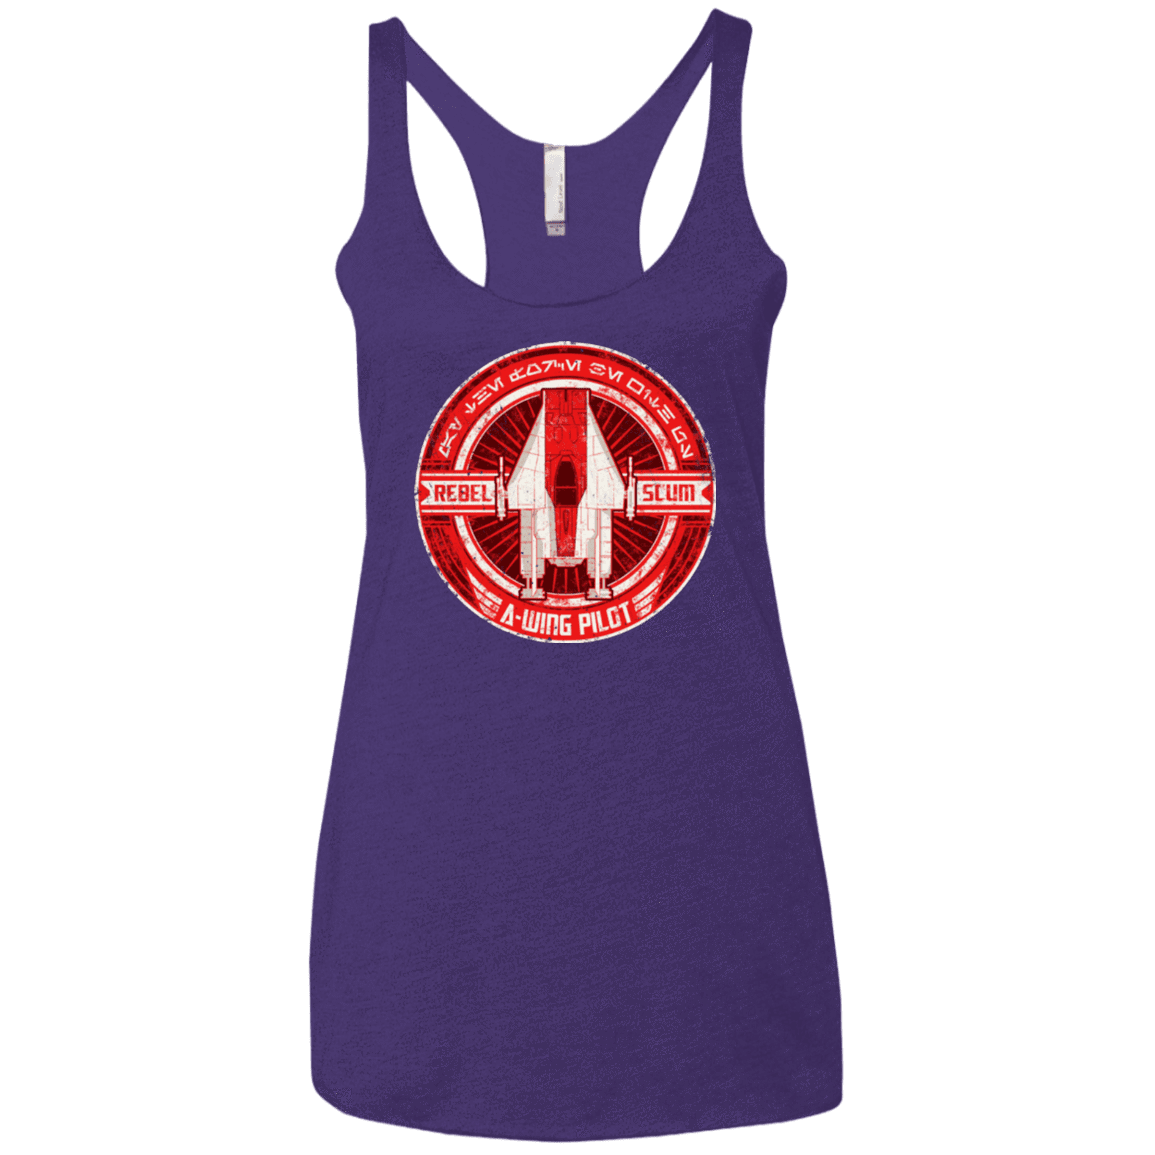 T-Shirts Purple Rush / X-Small A-Wing Women's Triblend Racerback Tank